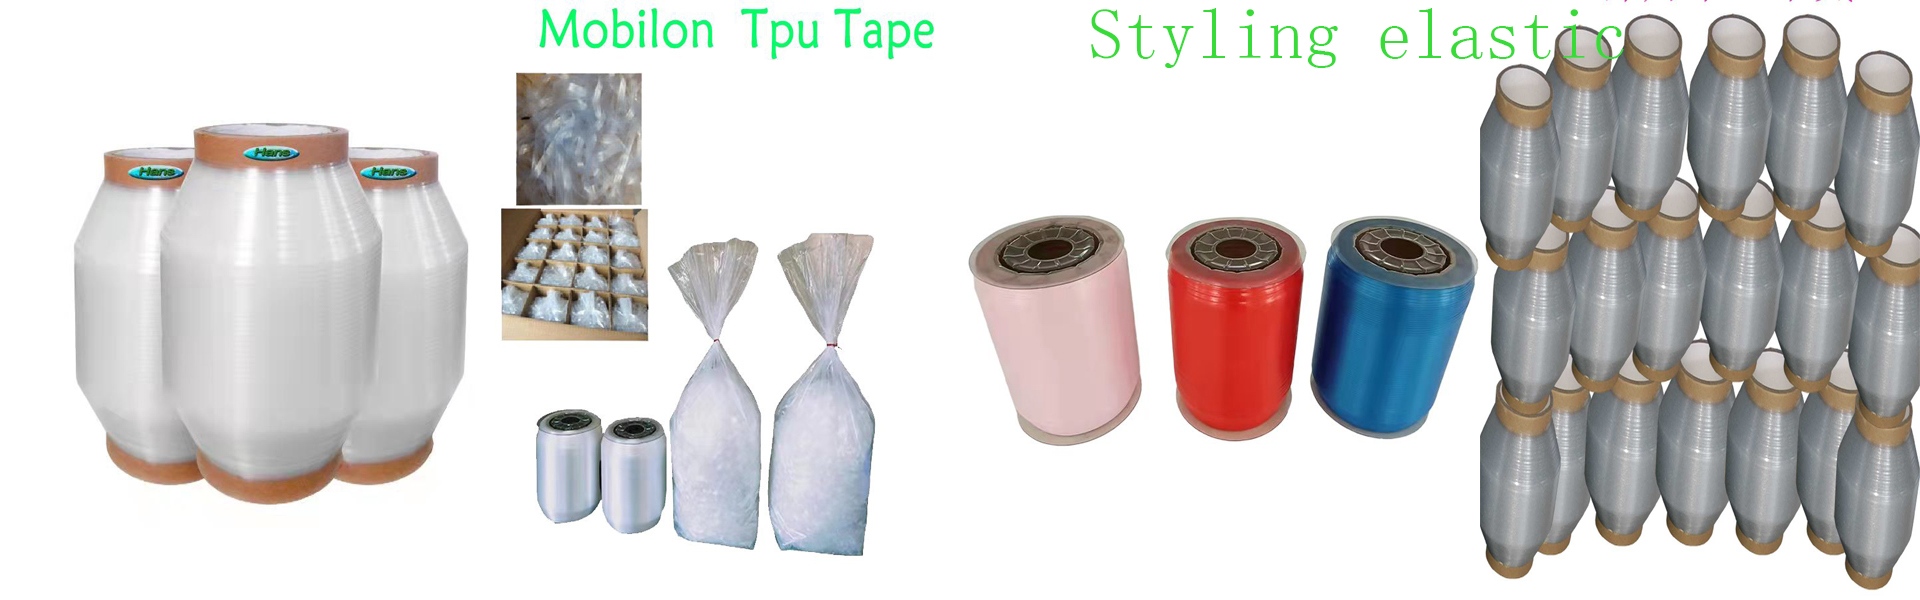 mobilone tape,transparent shoulder strap,tpu film,Dongguan Changan Tusheng Garment Accessories Co., Ltd.